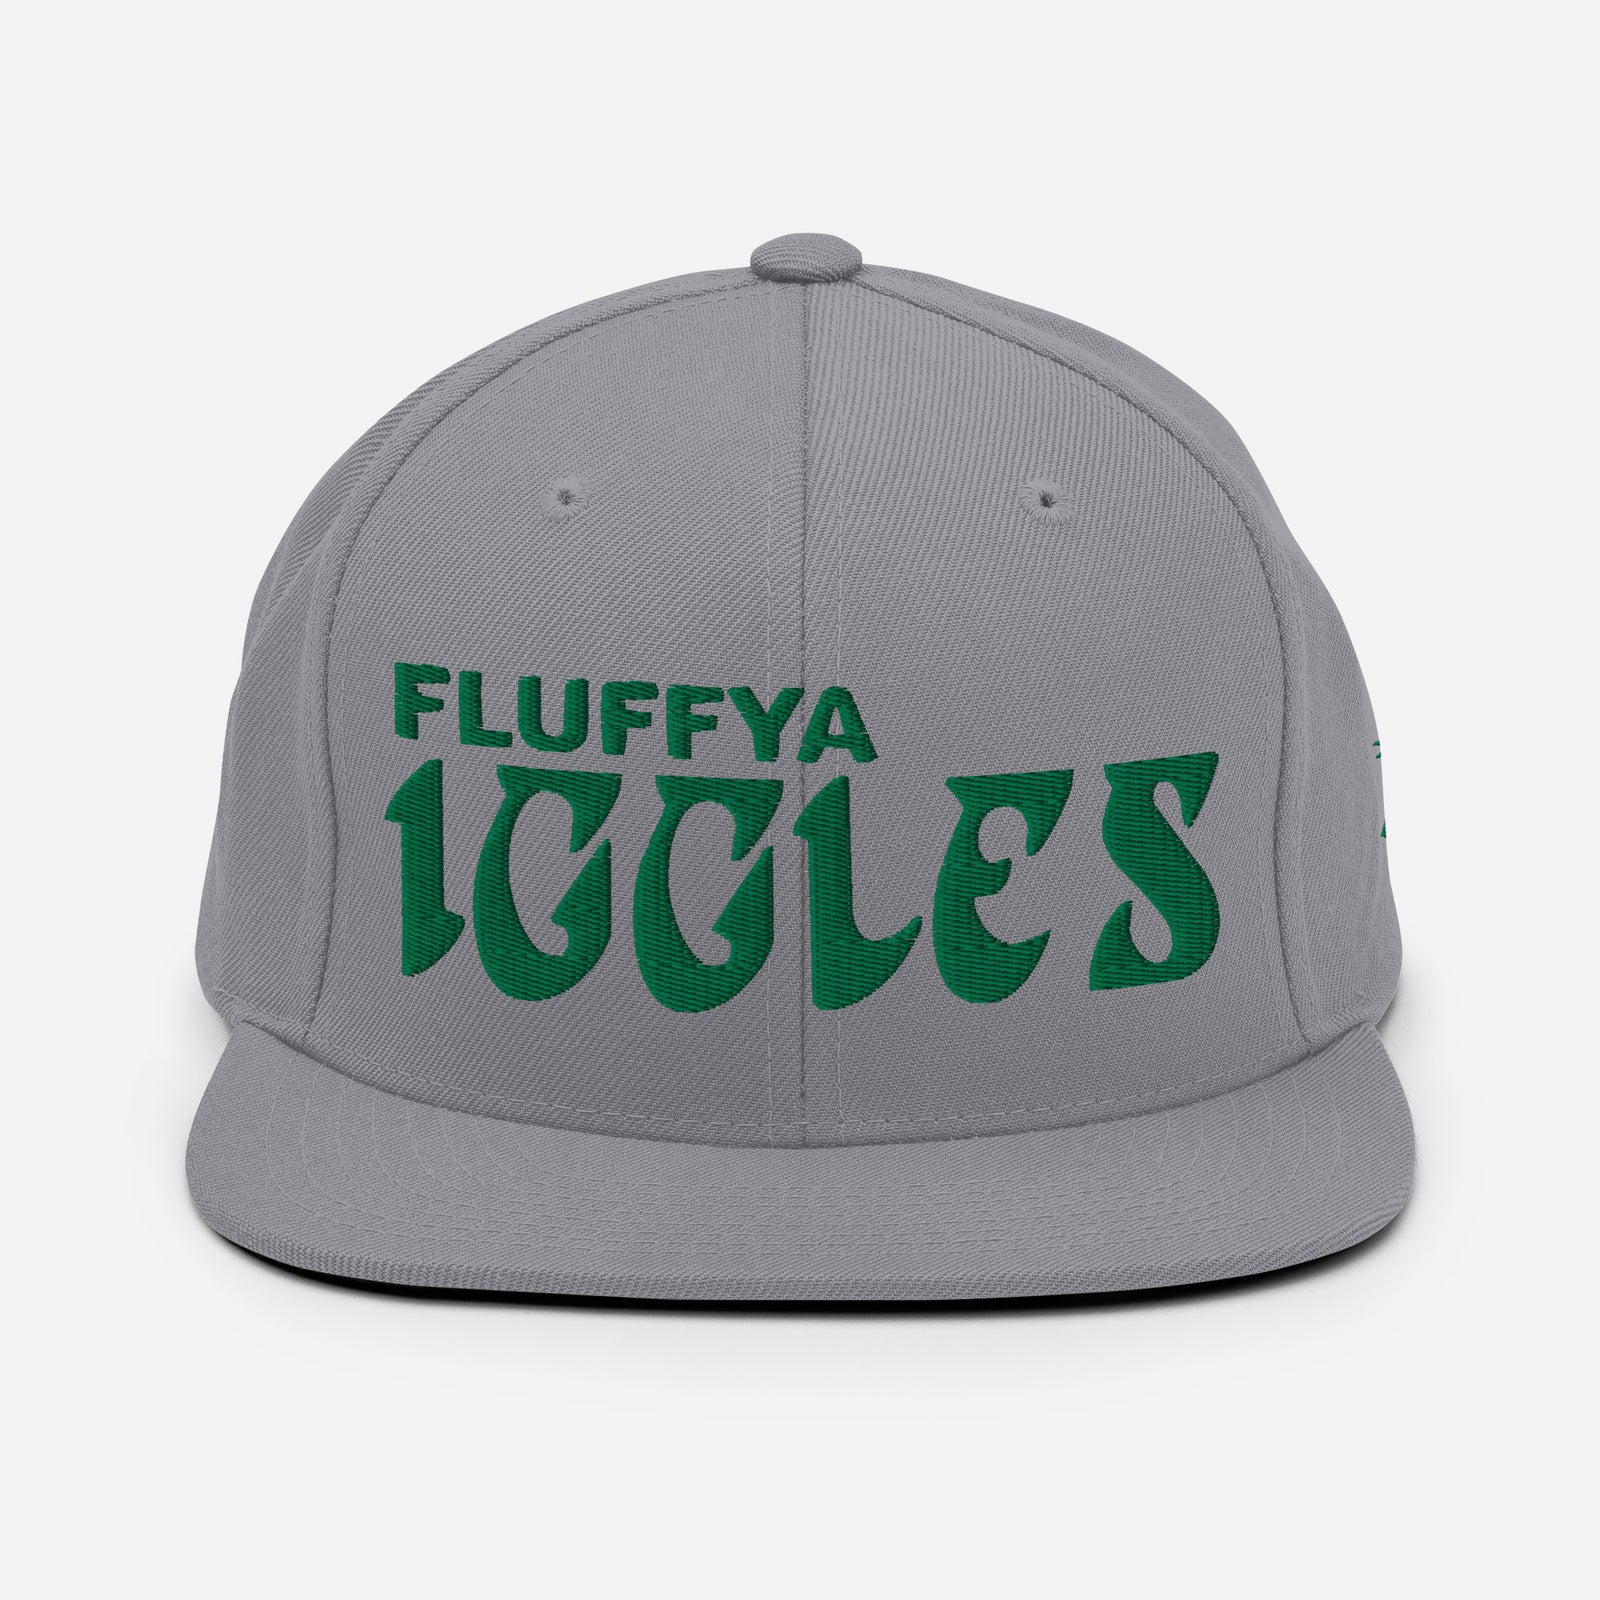 "Fluffya Iggles" Snapback Hat